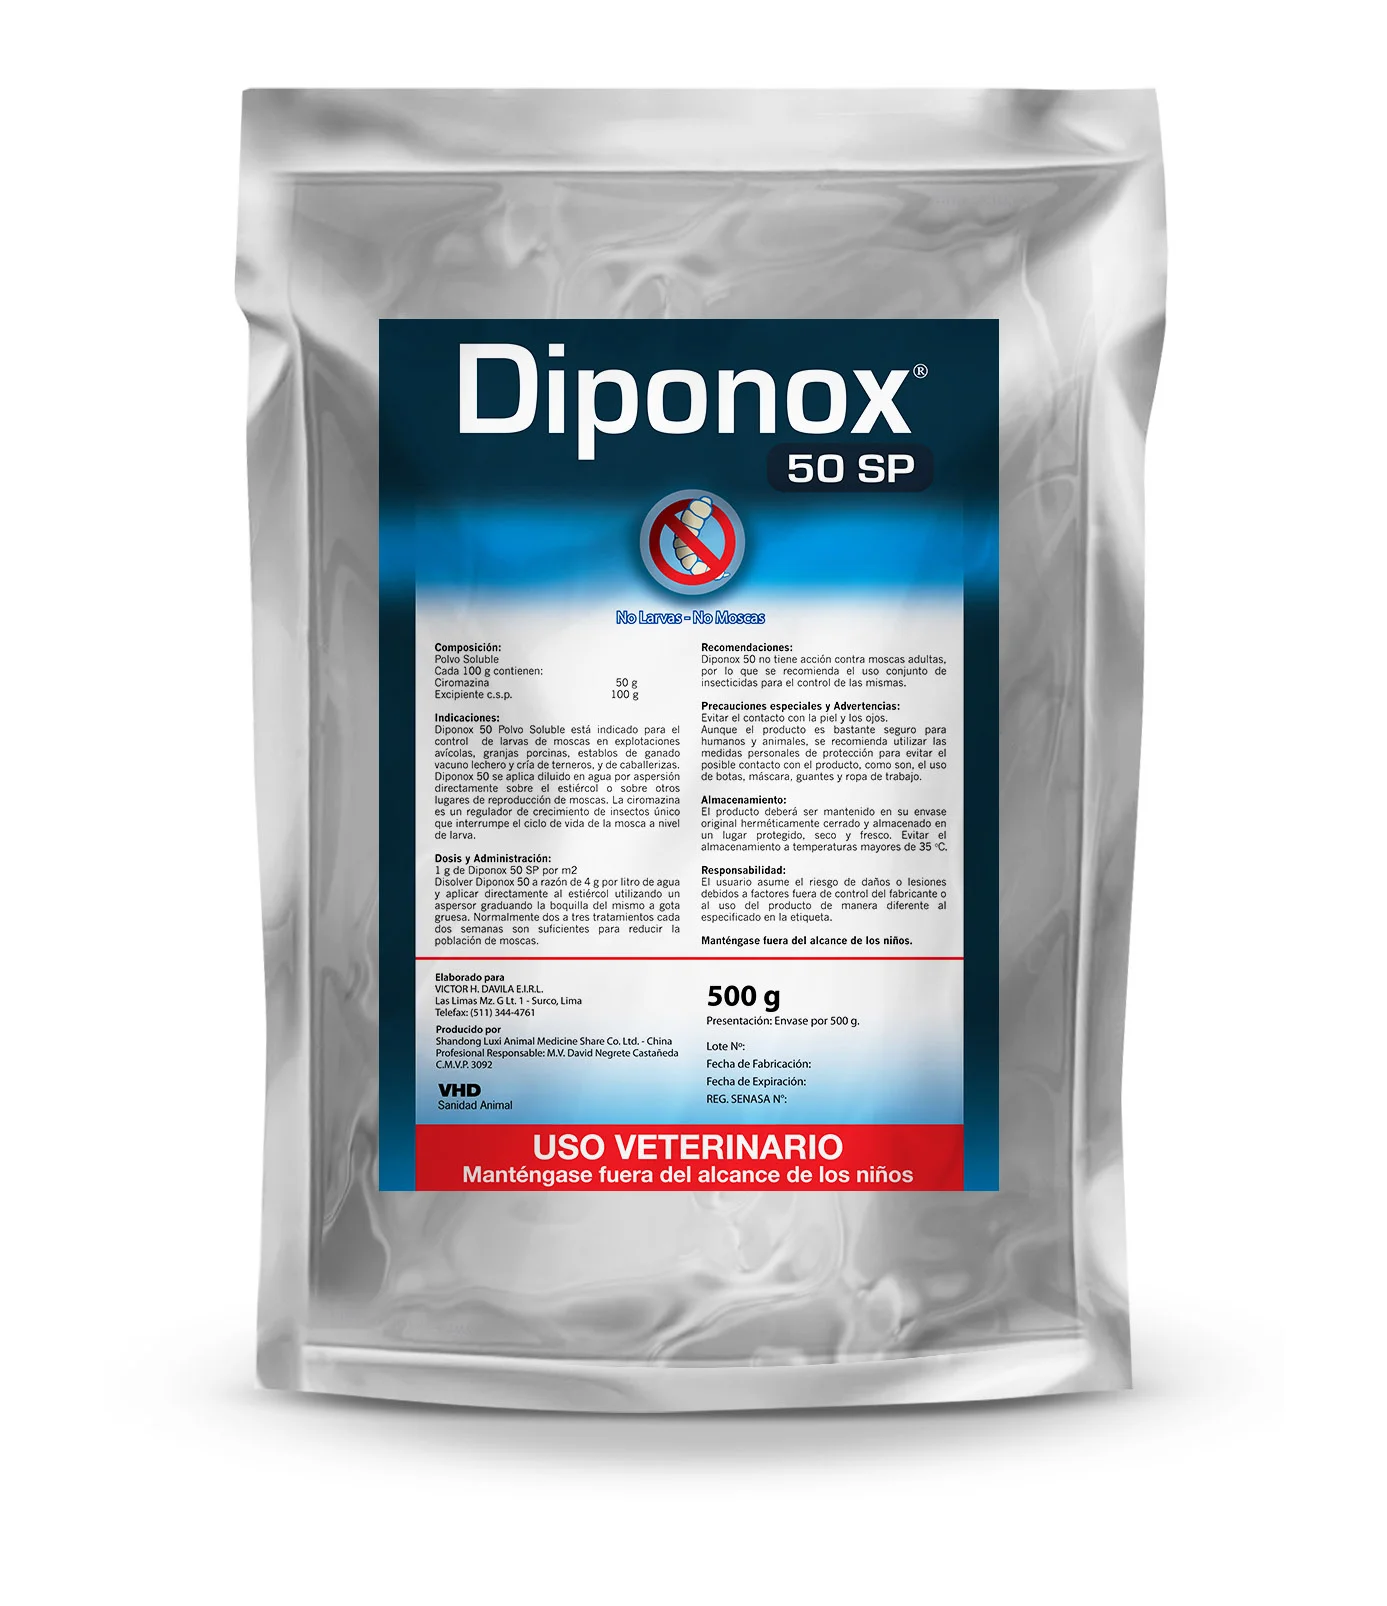 Diponox 50 SP